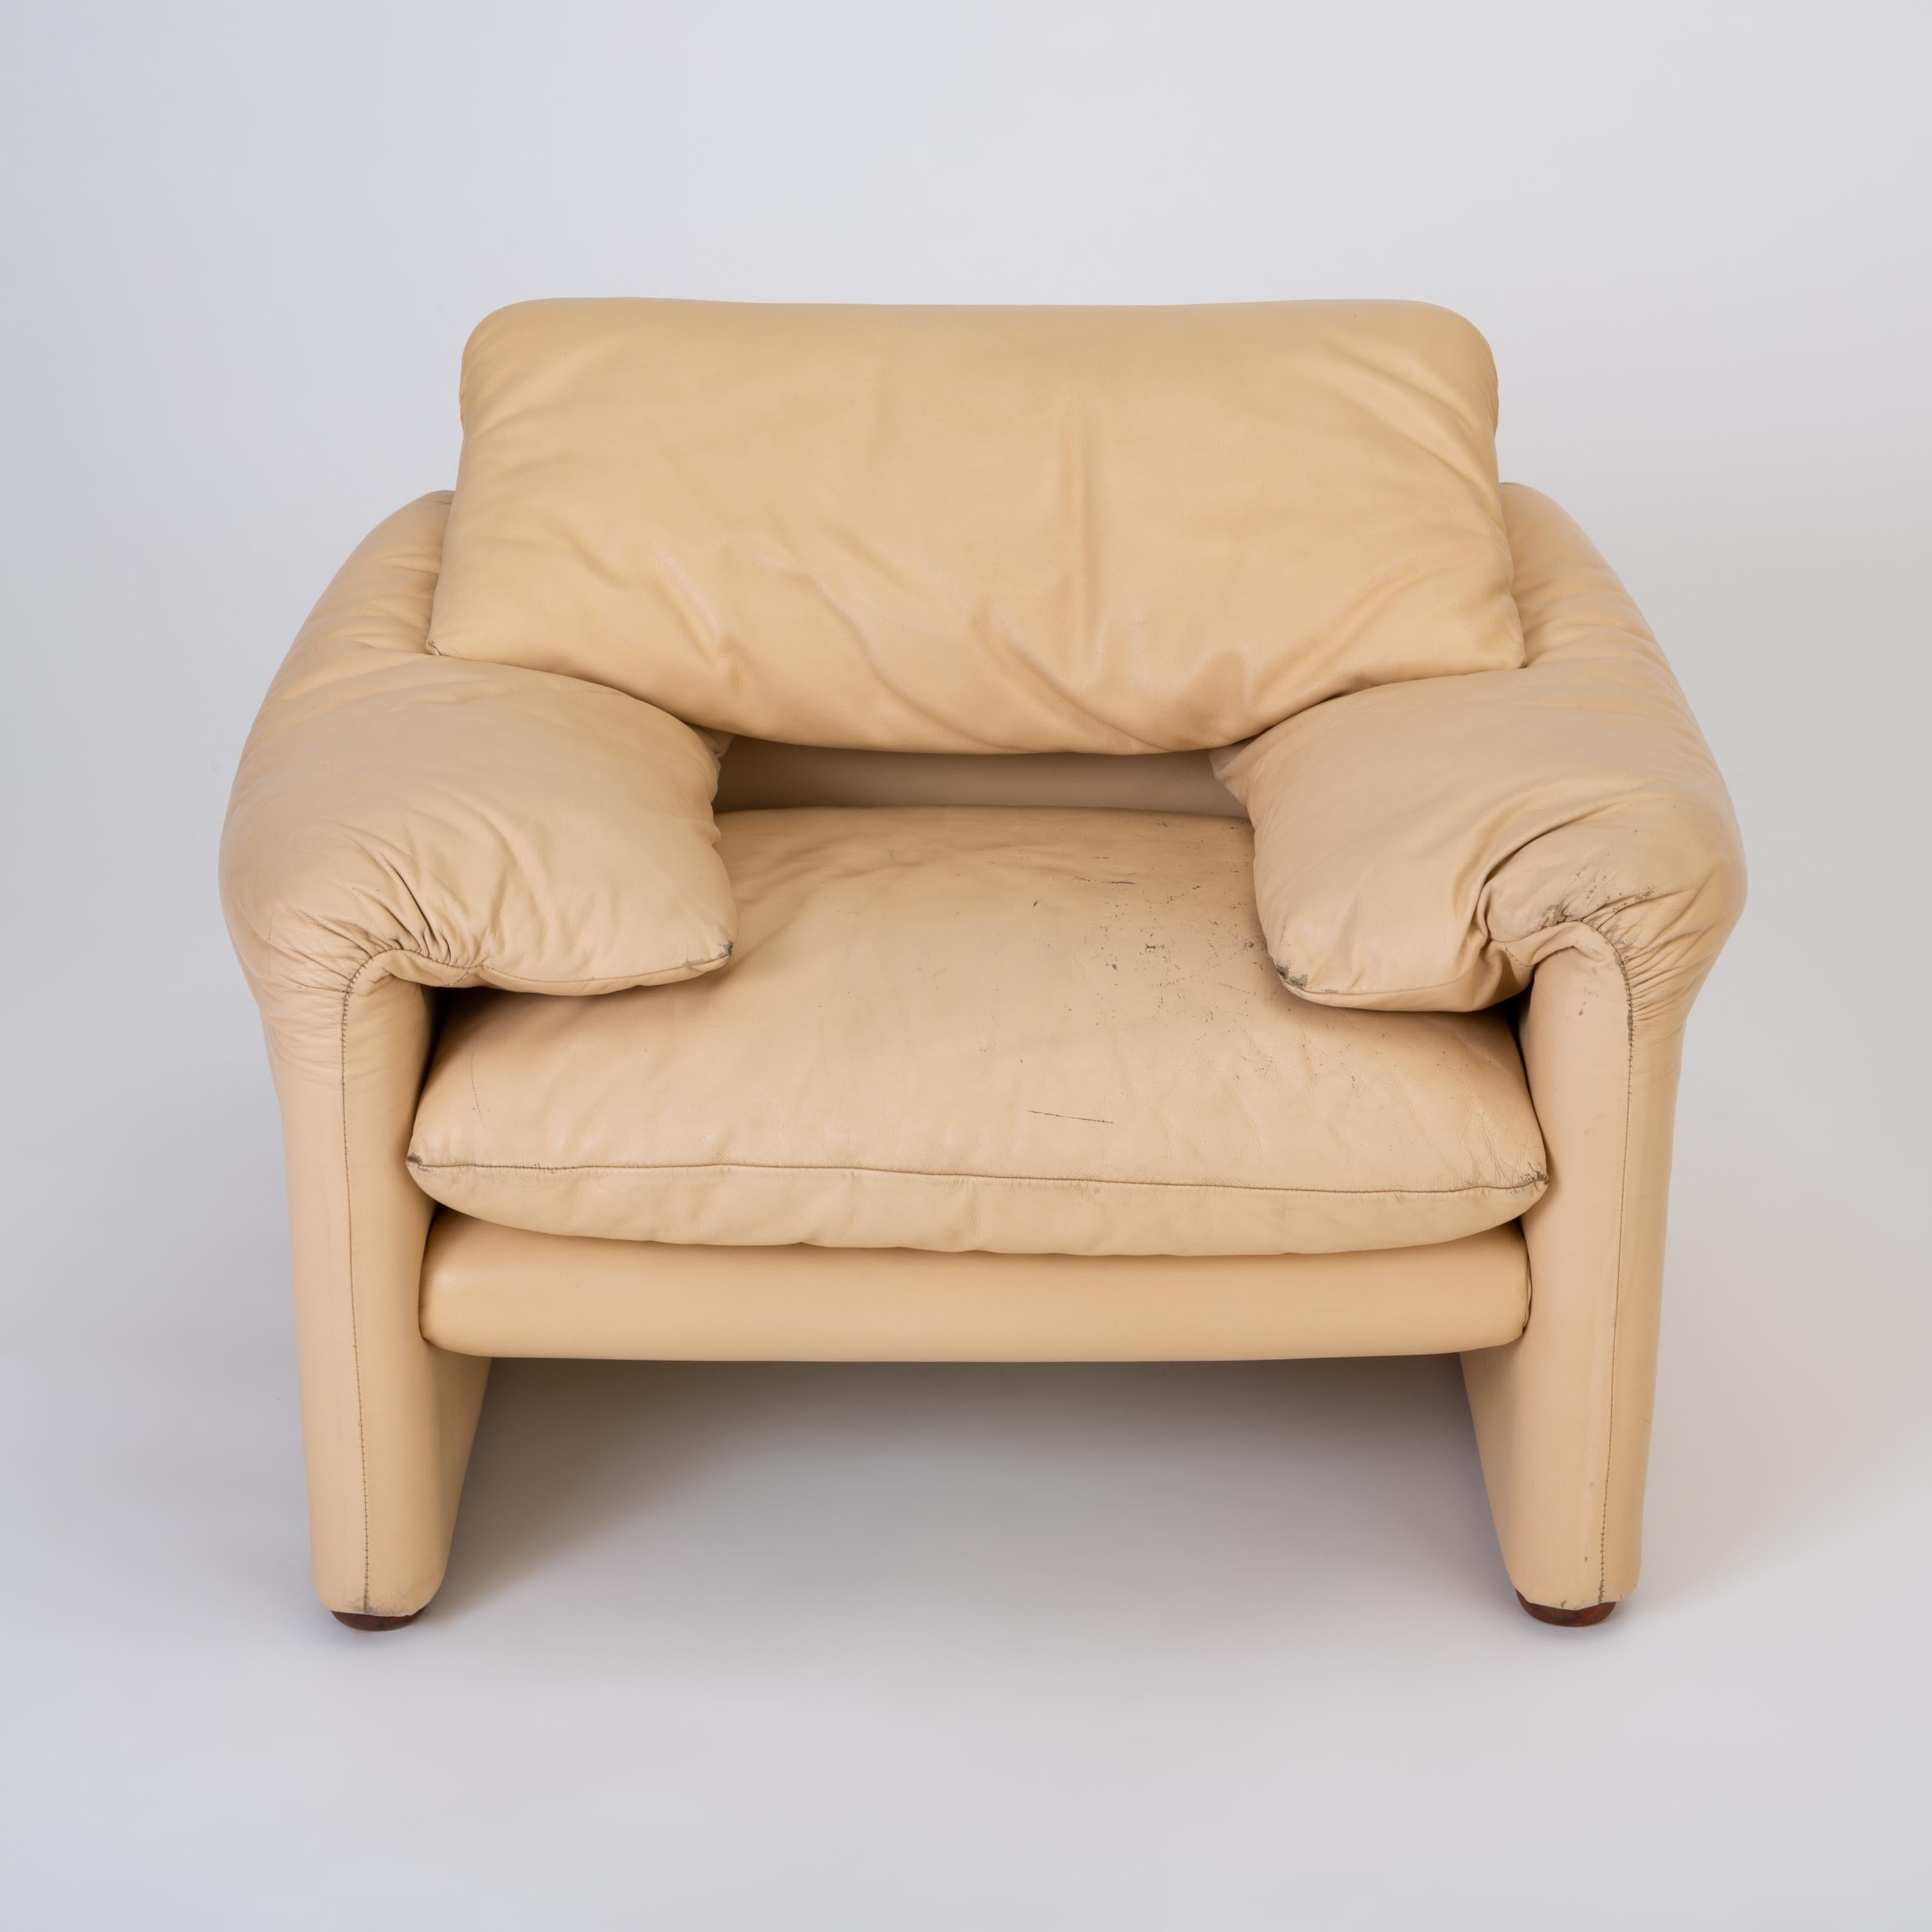 Italian Leather “Maralunga” Chair by Vico Magistretti for Cassina